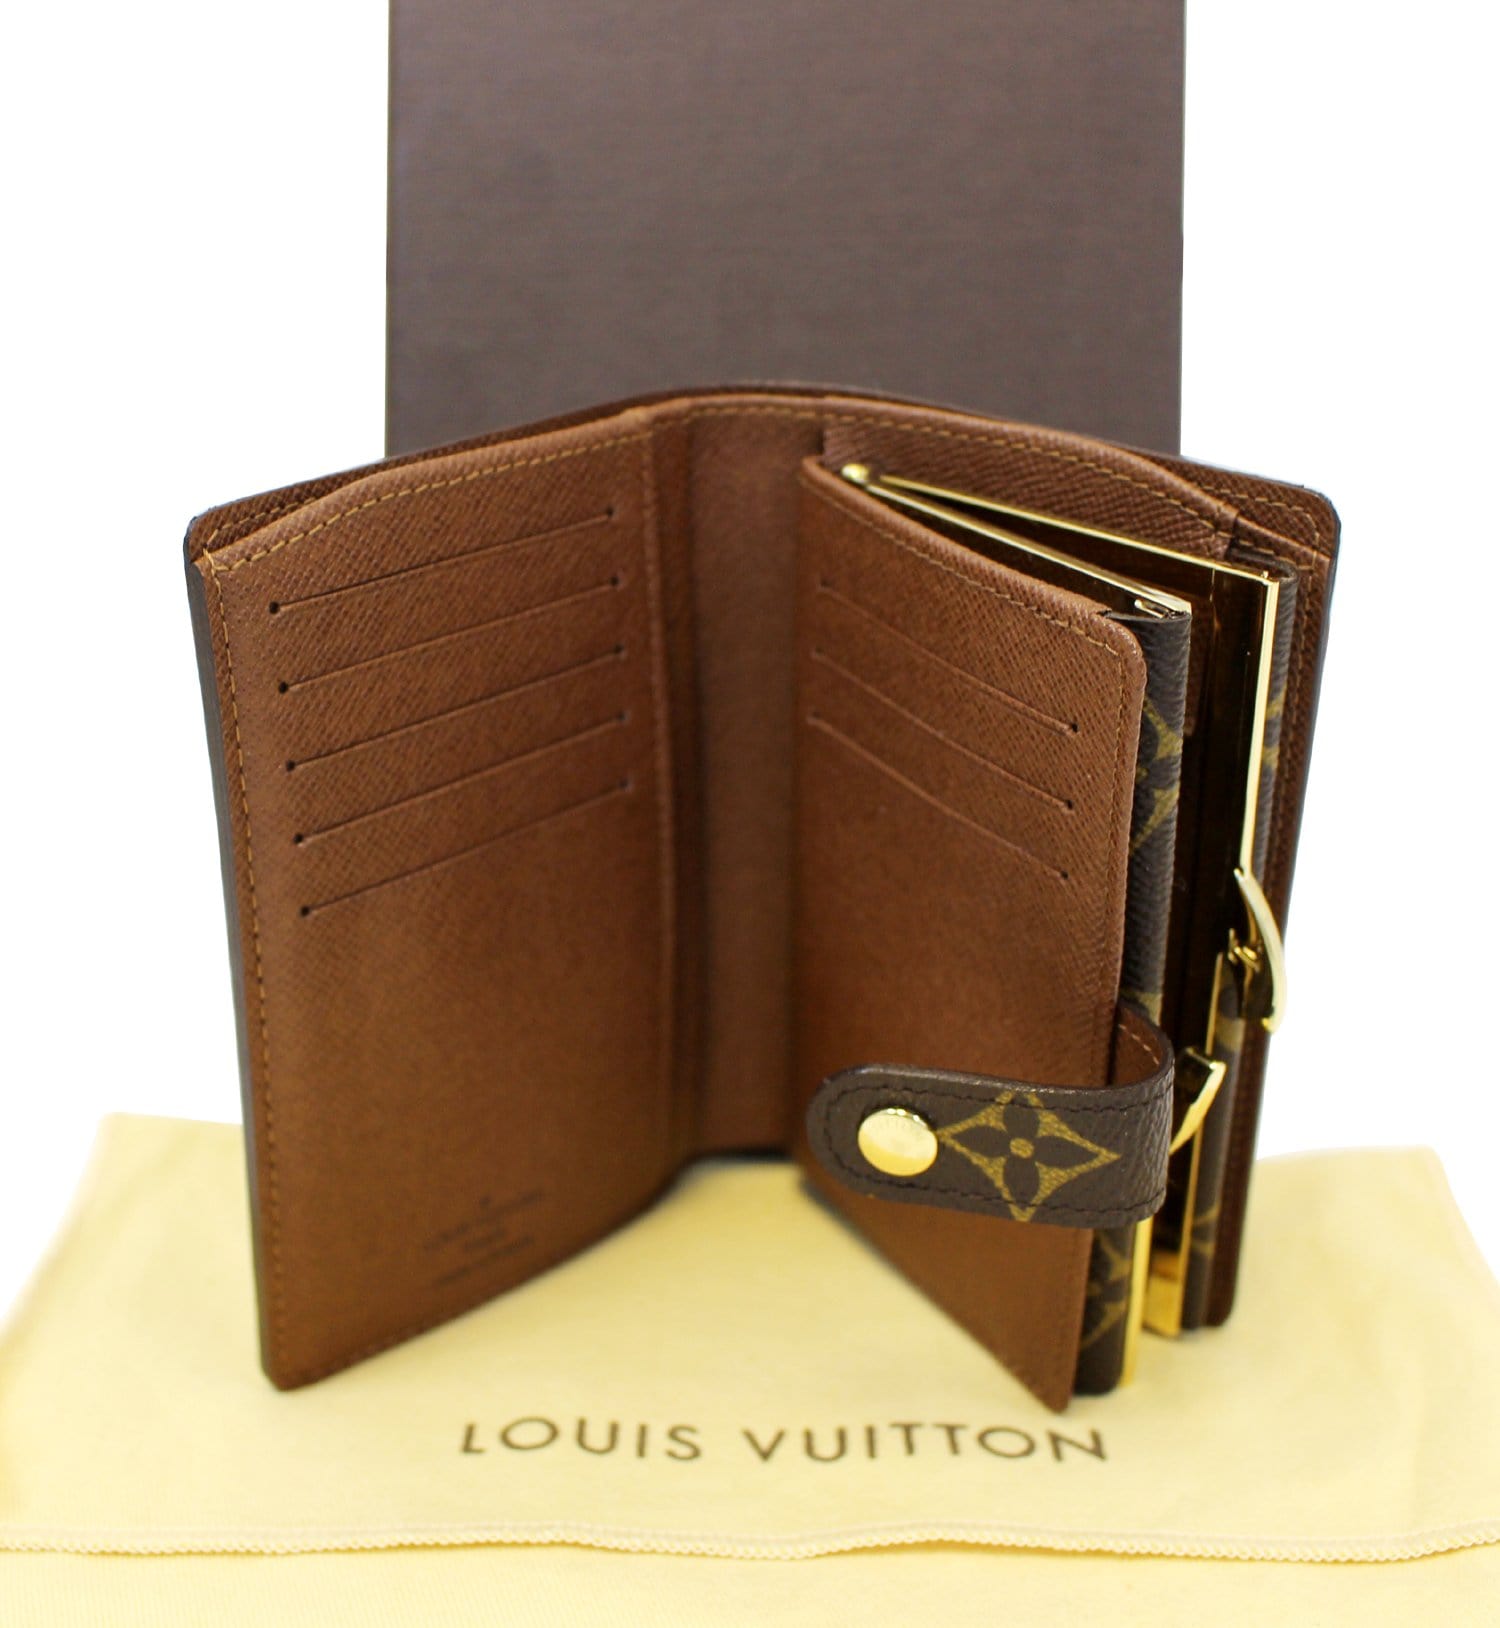 LOUIS VUITTON Monogram Canvas French Purse Wallet